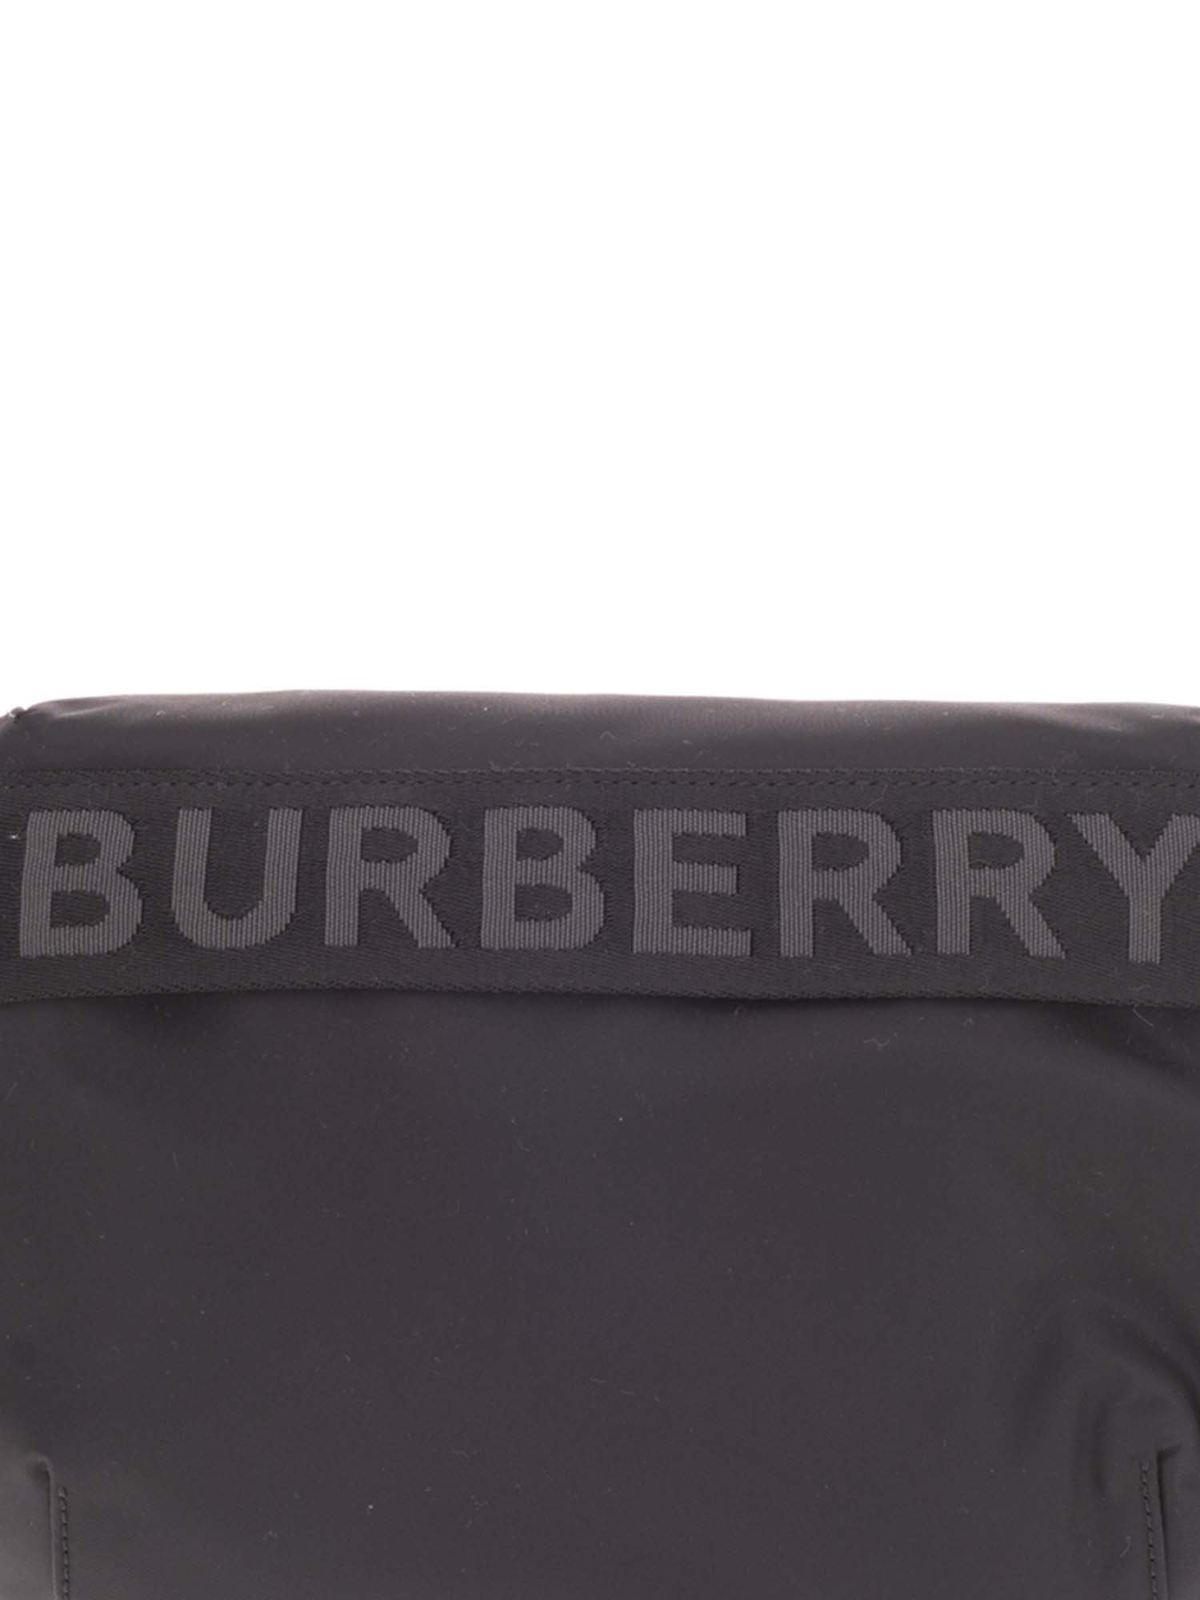 Burberry ECONYL Logo Cross-Body Bag